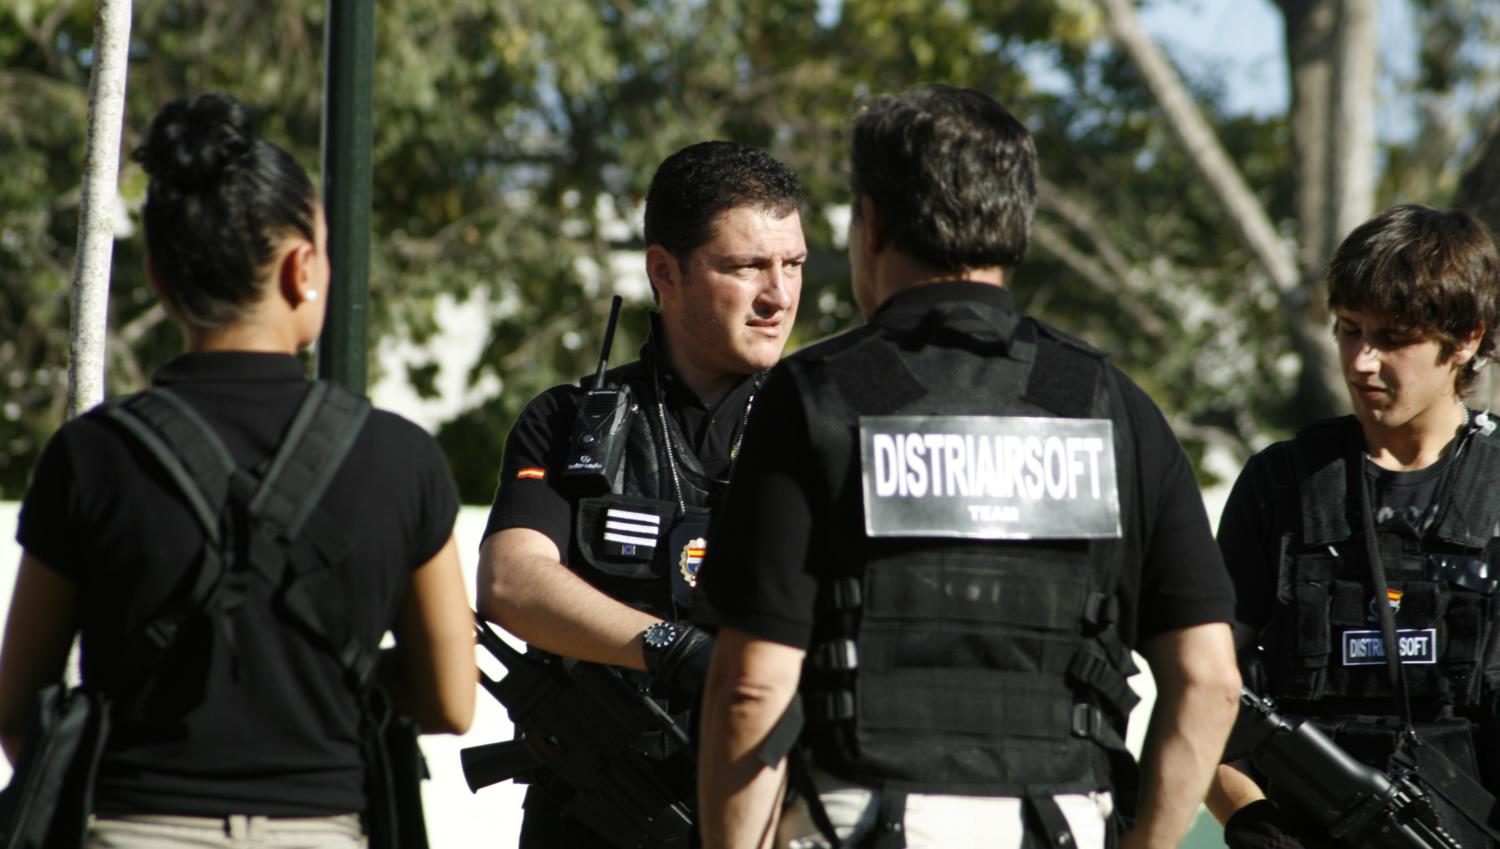 Spanish+police+undergoing+training.